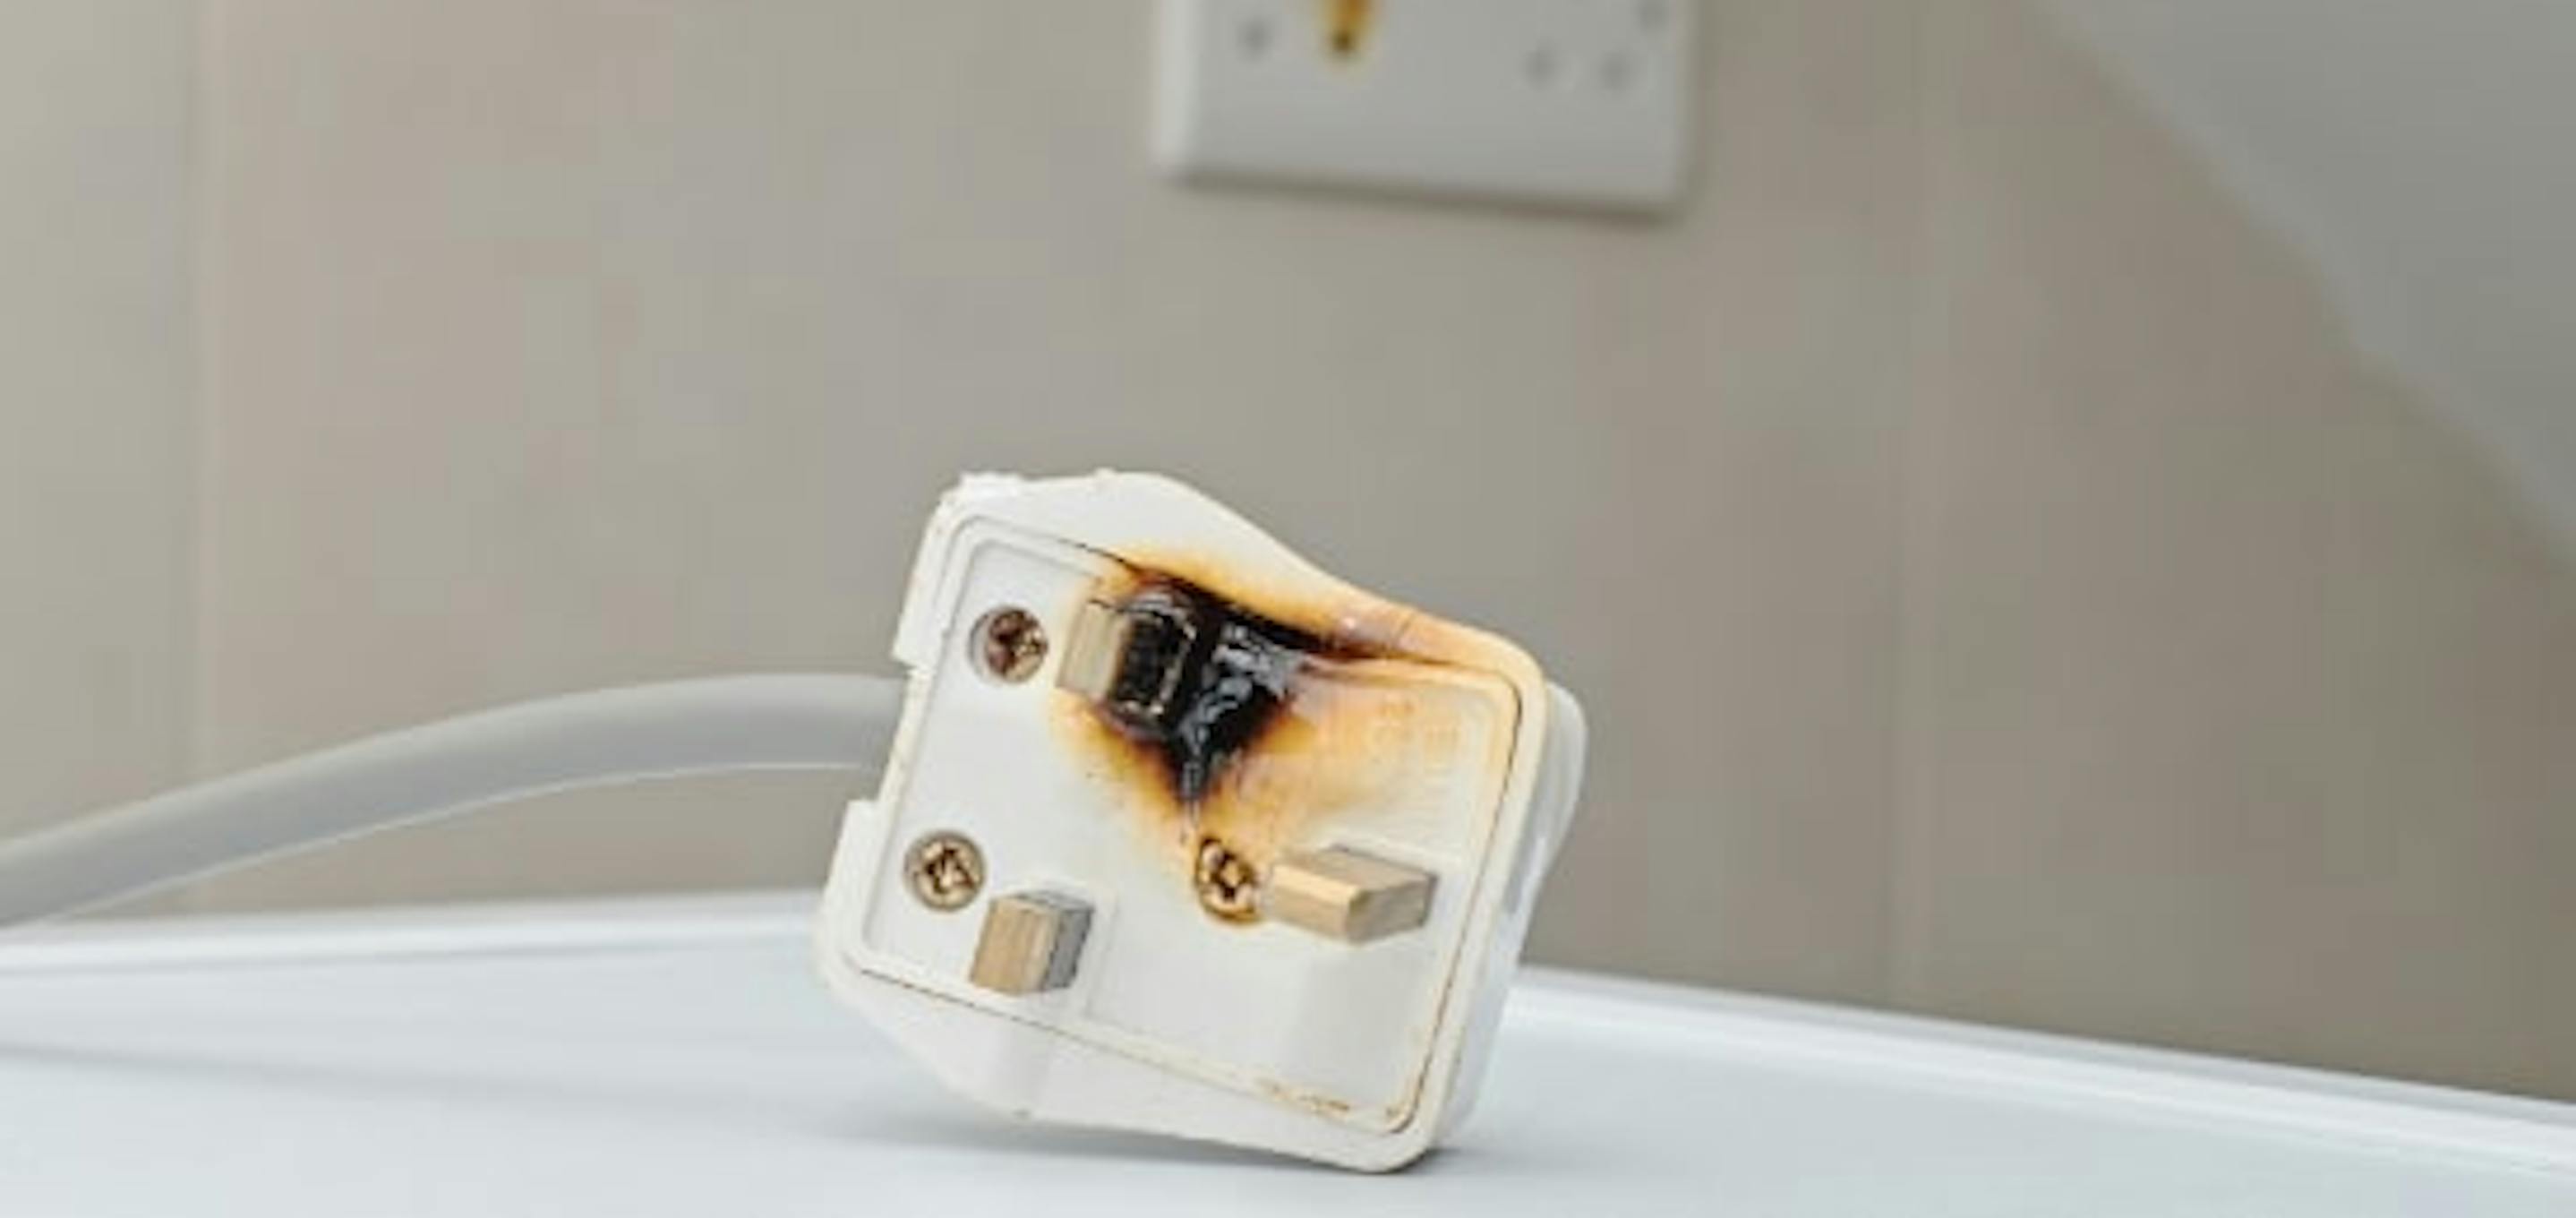 burned electrical plug